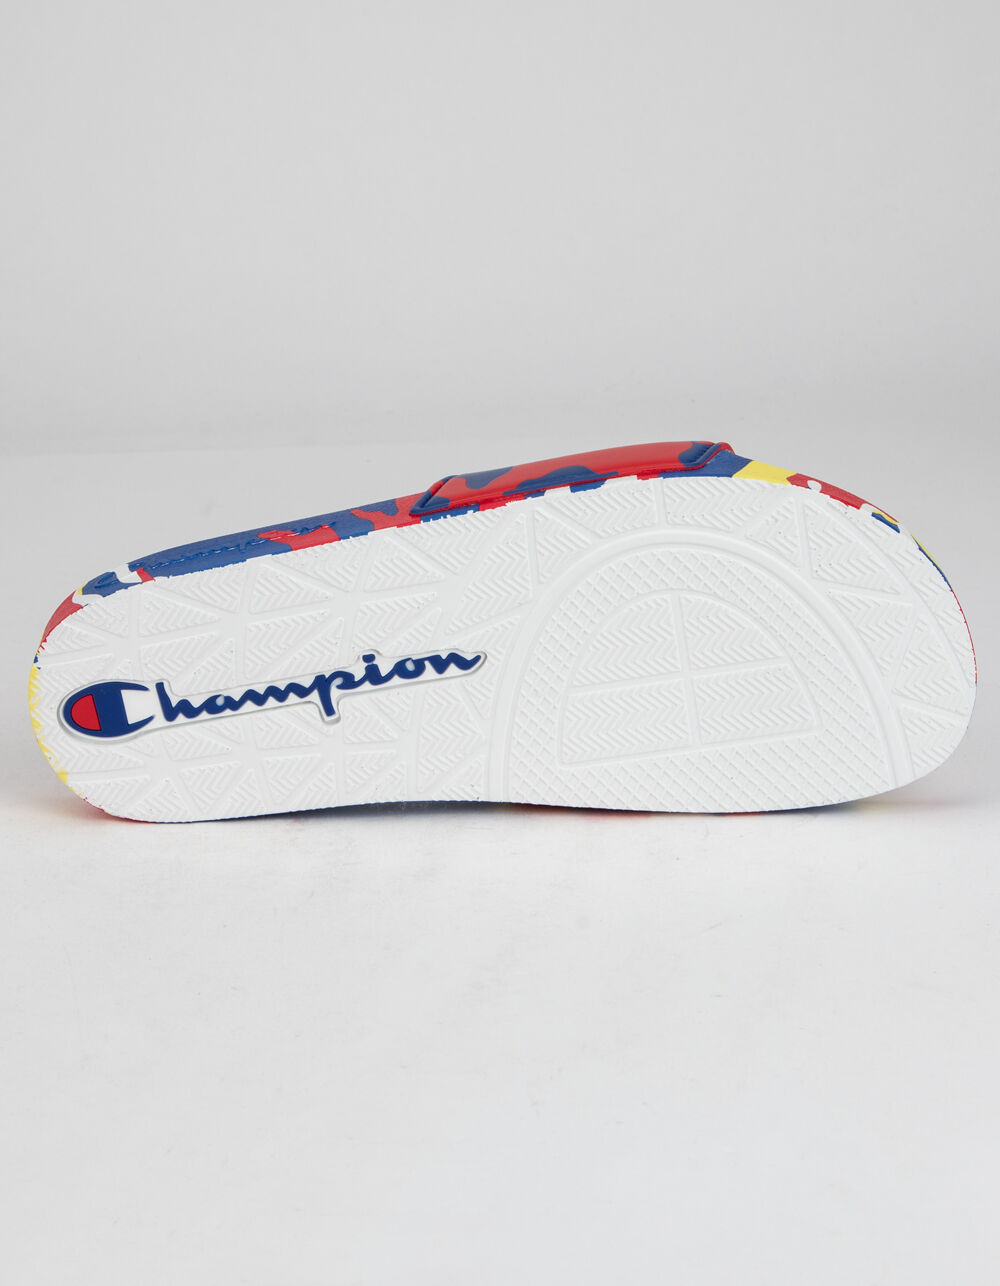 CHAMPION IPO Mens Multi Camo Slide Sandals - MULTI | Tillys